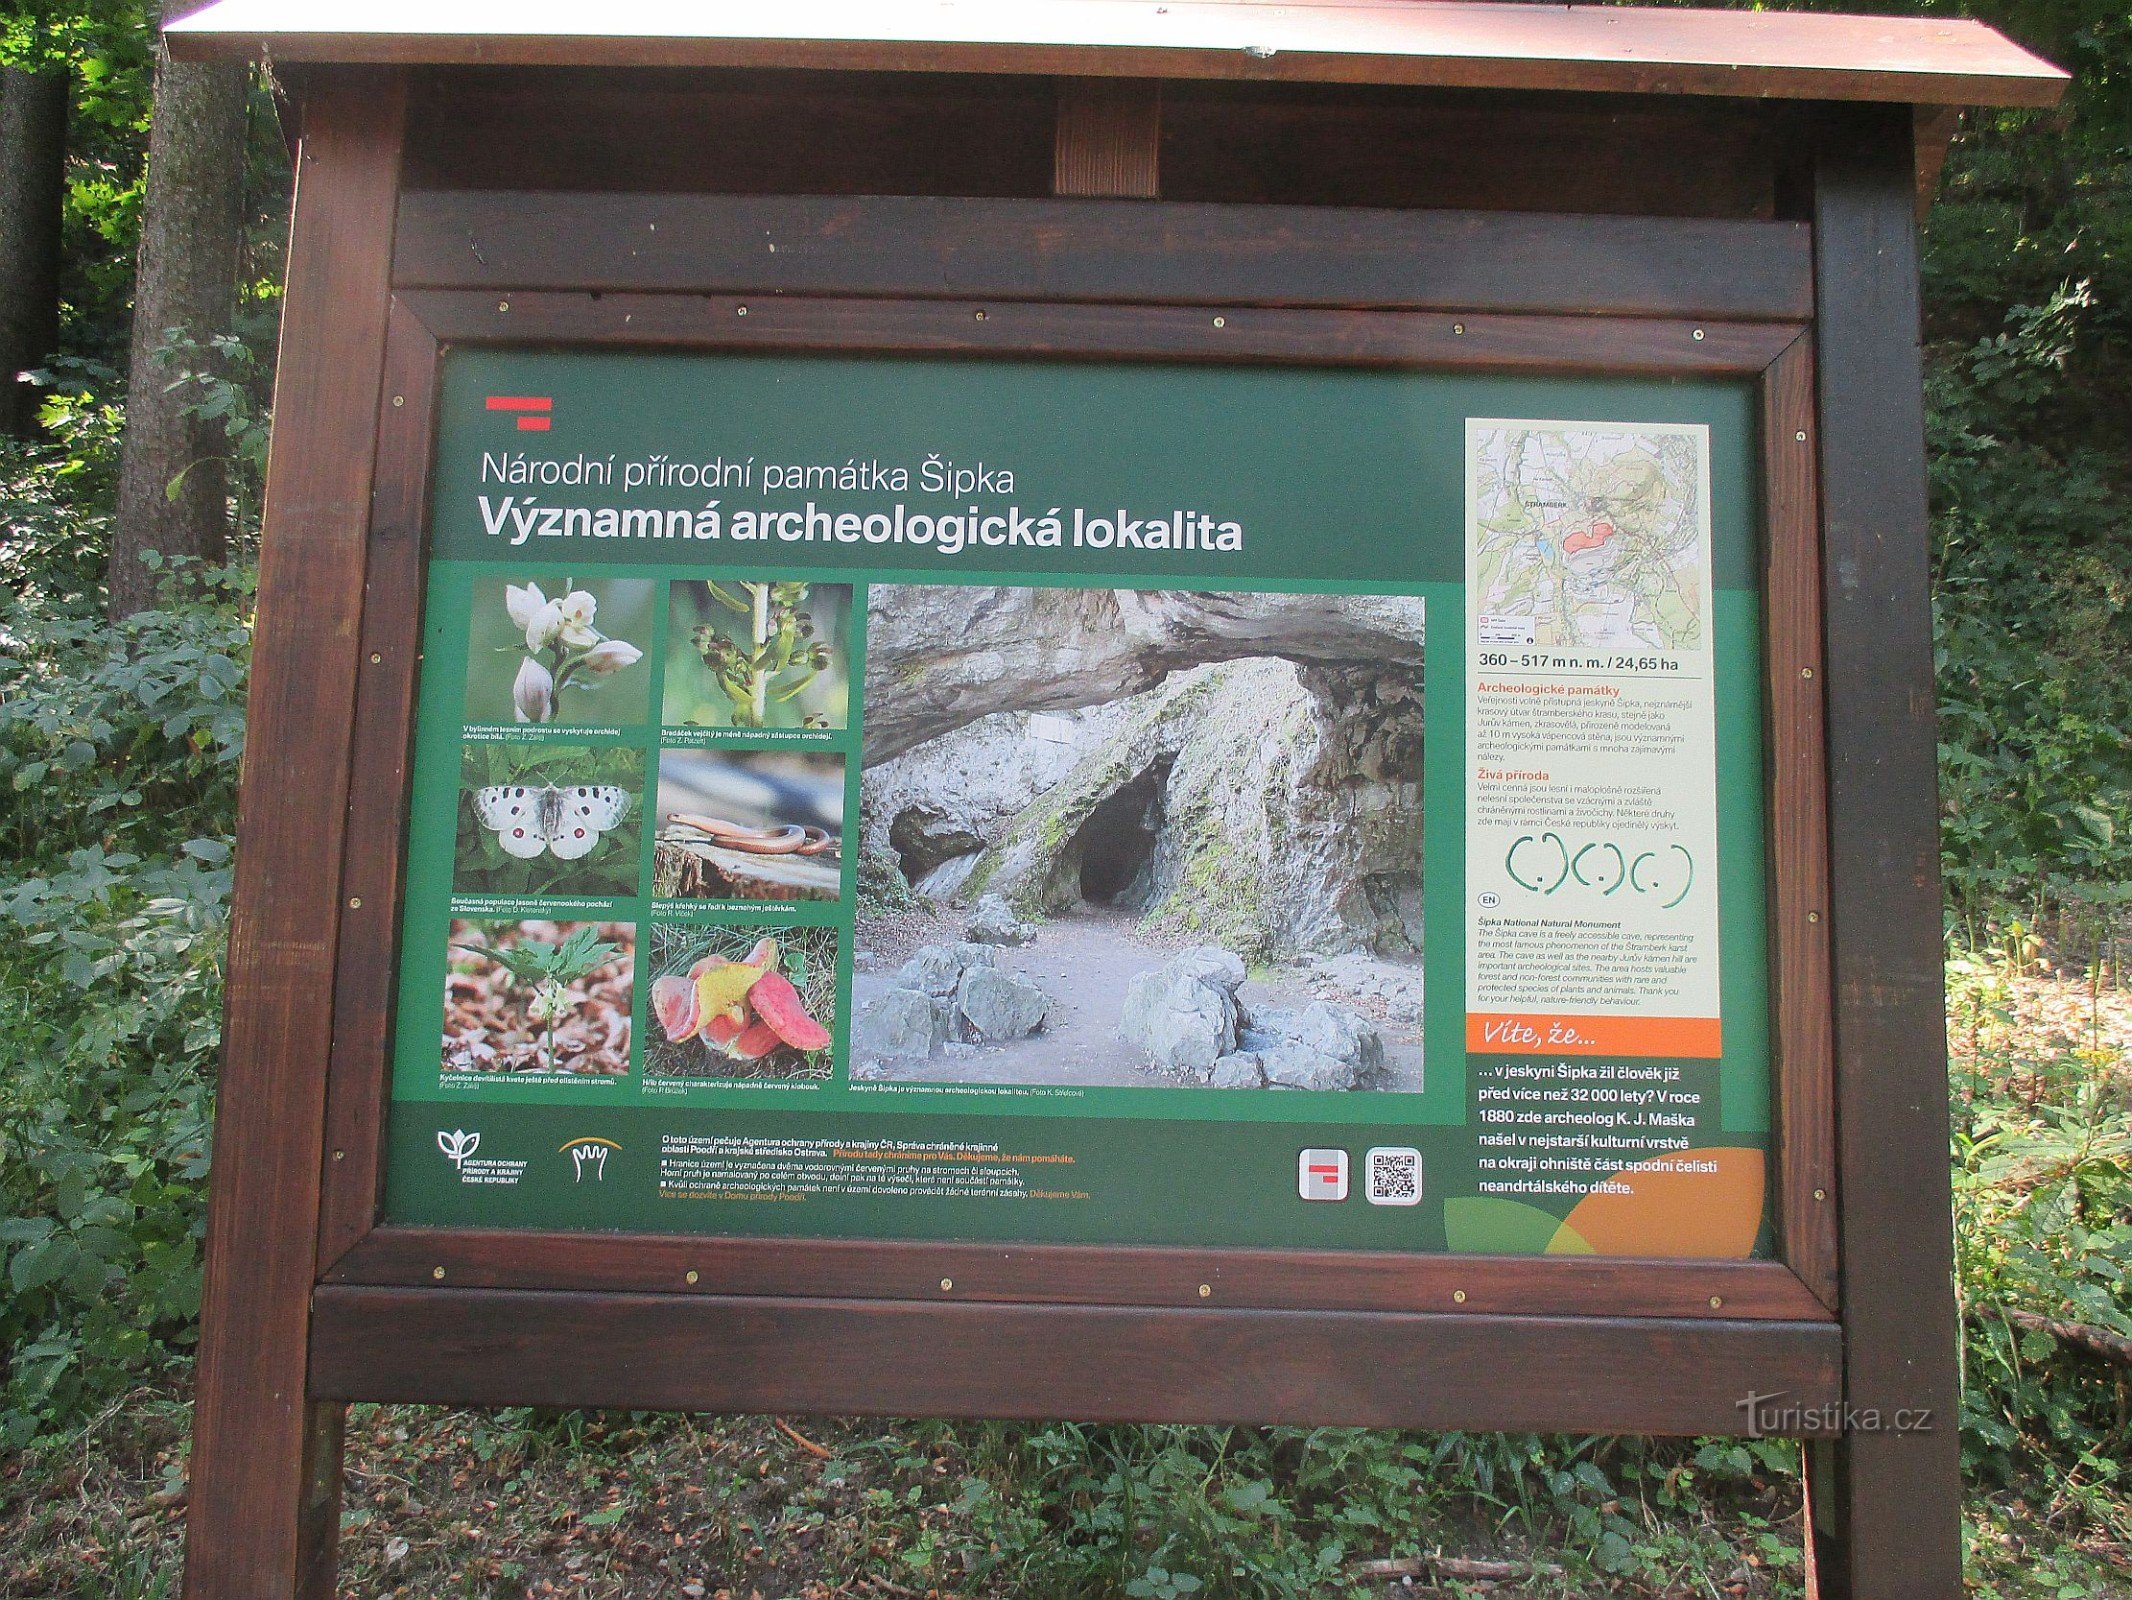 Narodowy pomnik przyrody Šipka